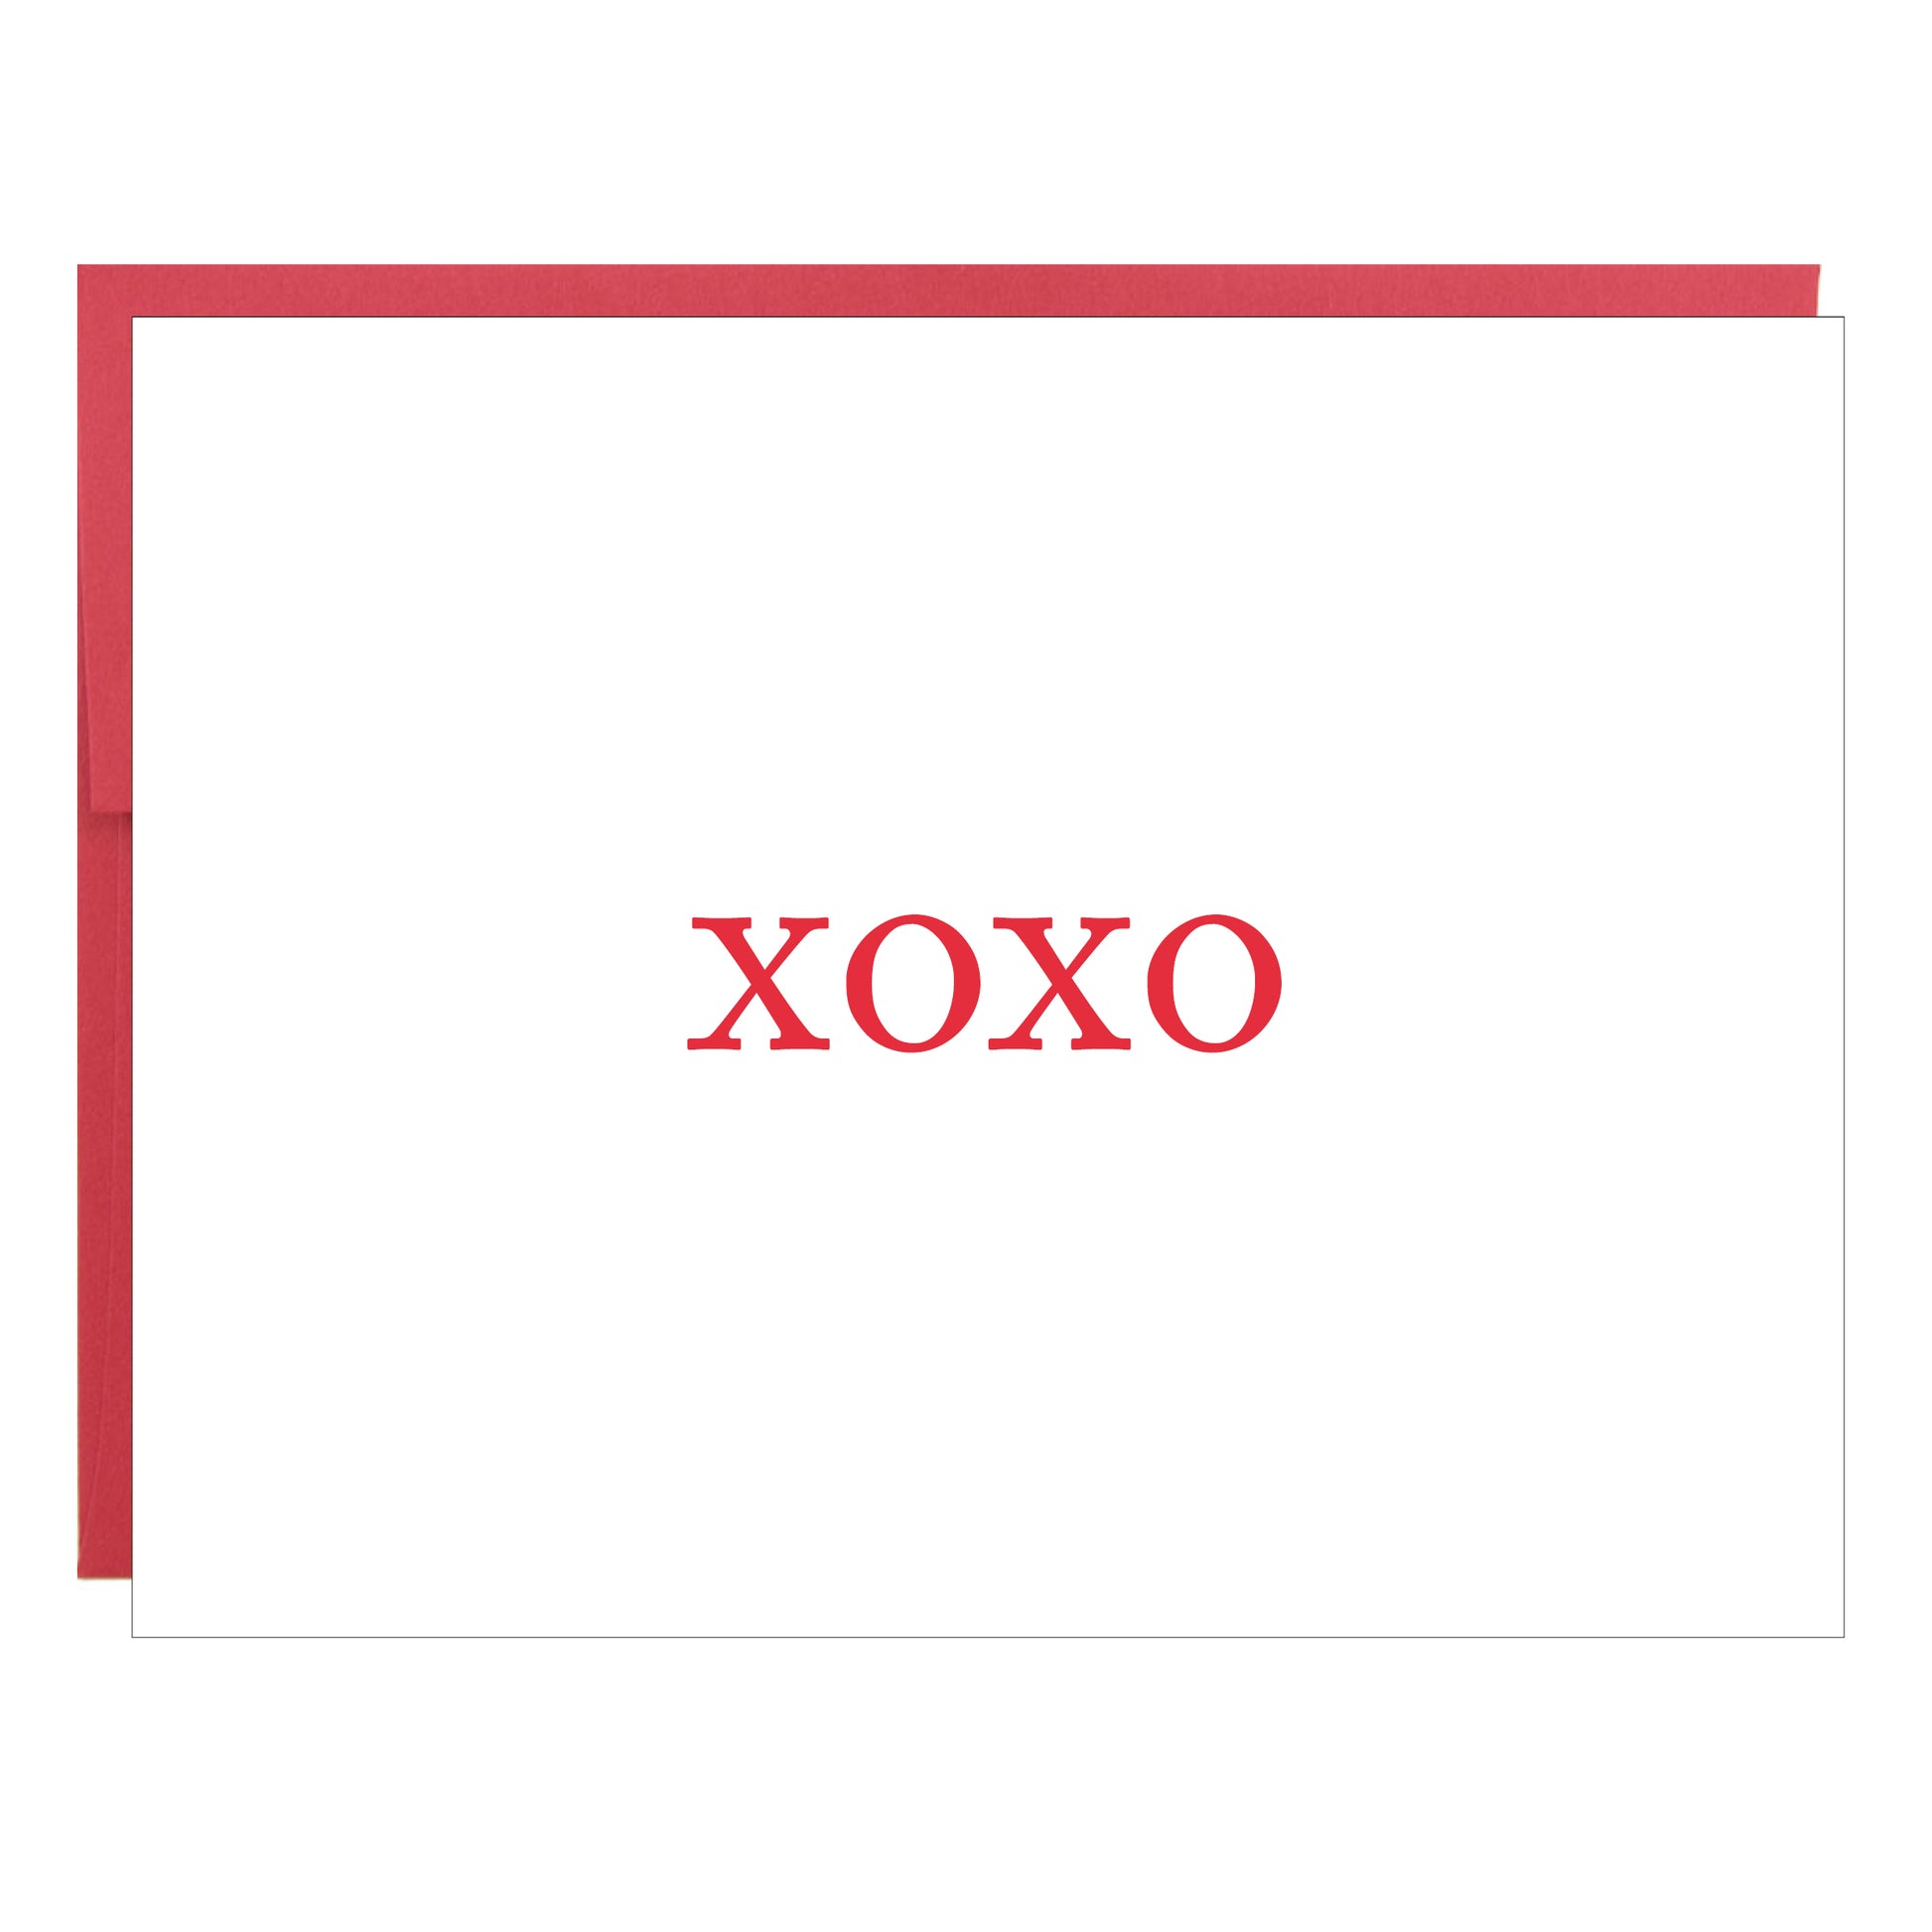 XOXO Letterpress Greeting Card - Idea Chíc